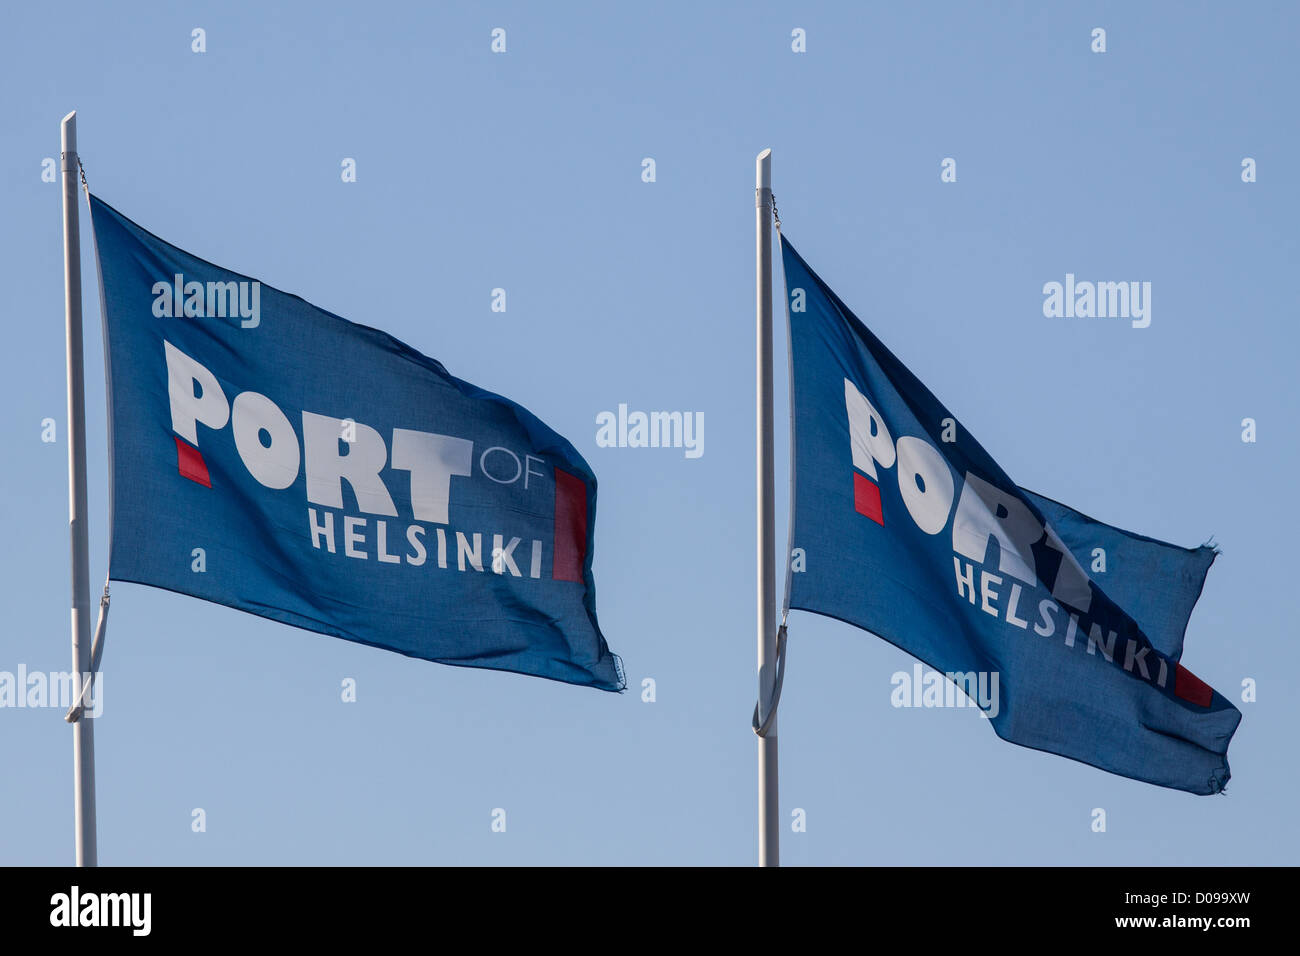 FLAG OF THE PORT OF HELSINKI WAVING IN THE WIND HELSINKI FINLAND EUROPE Stock Photo